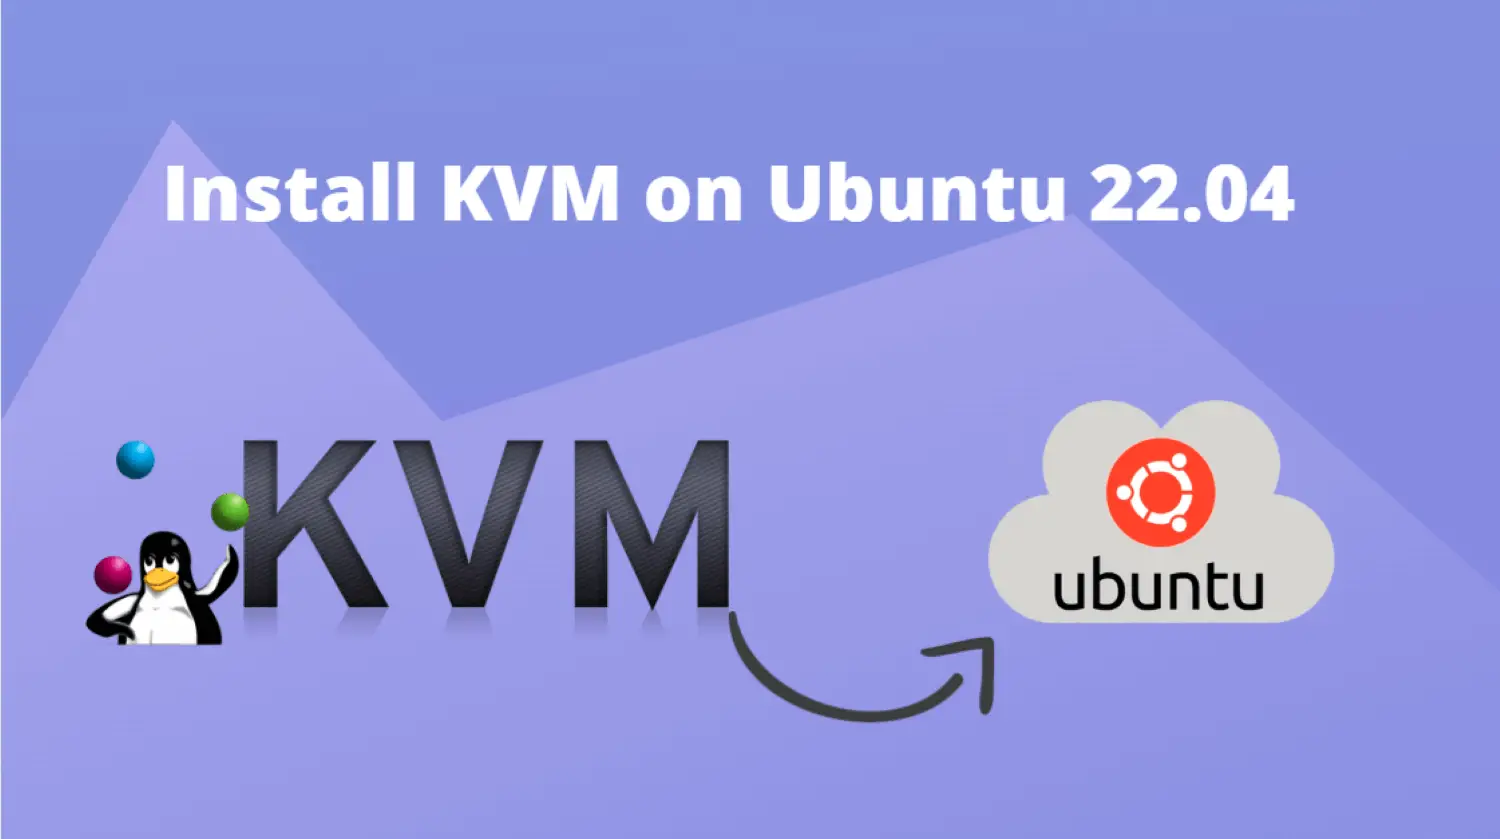 Install KVM on Ubuntu 22.04